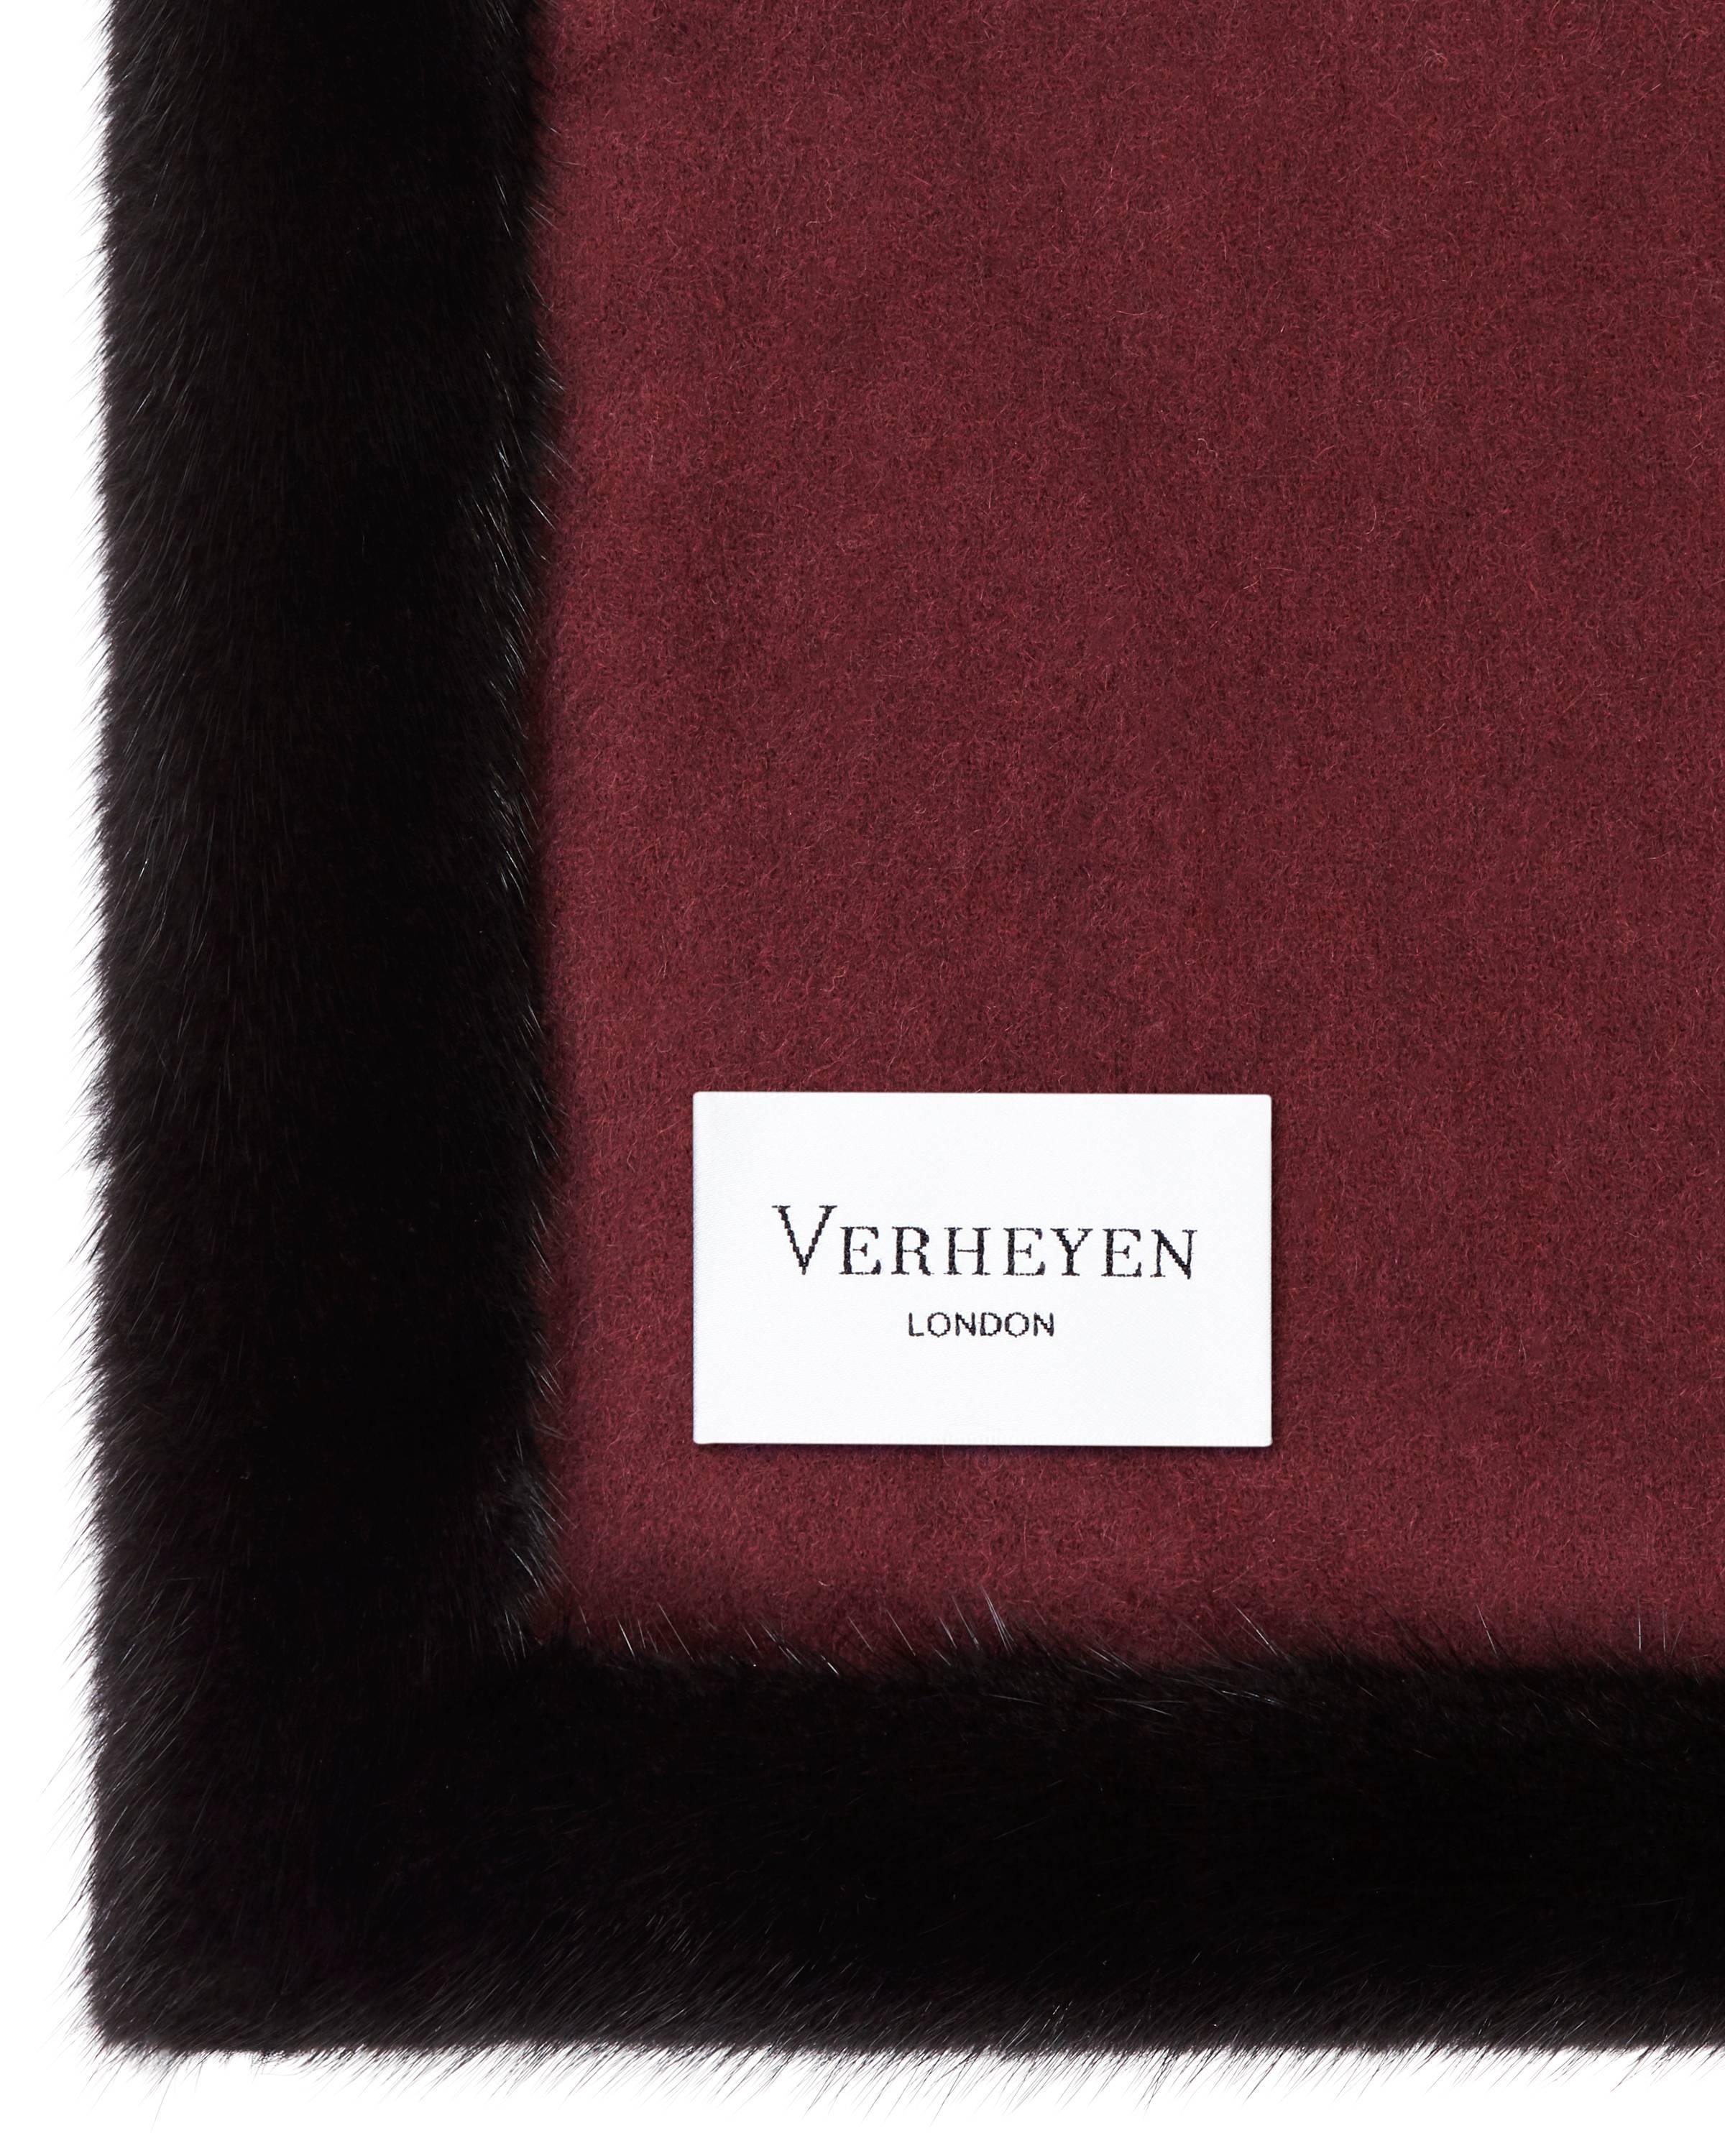 Women's or Men's Verheyen London Mink Fur Trimmed Black & Burgundy Cashmere Shawl 